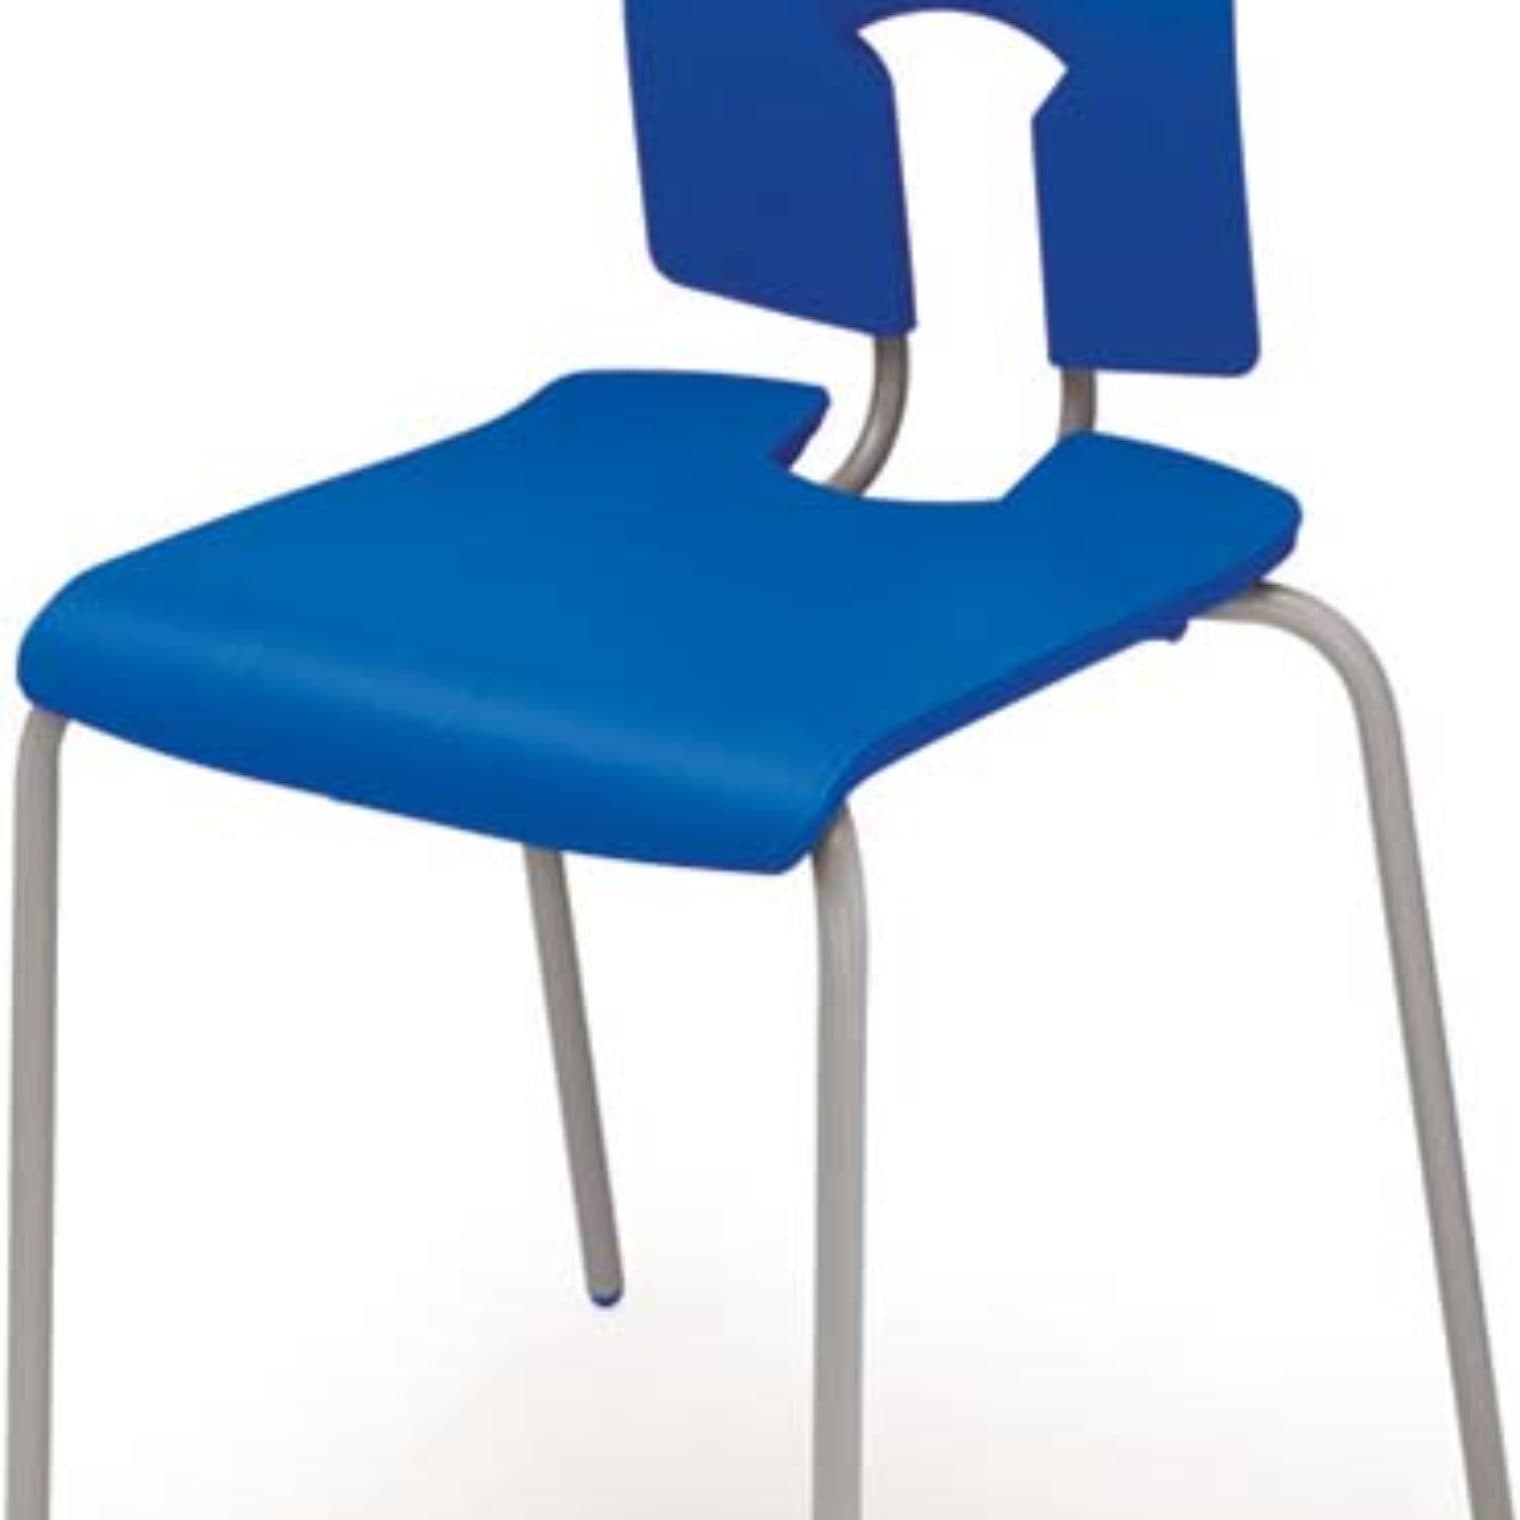 Pennine posture chair